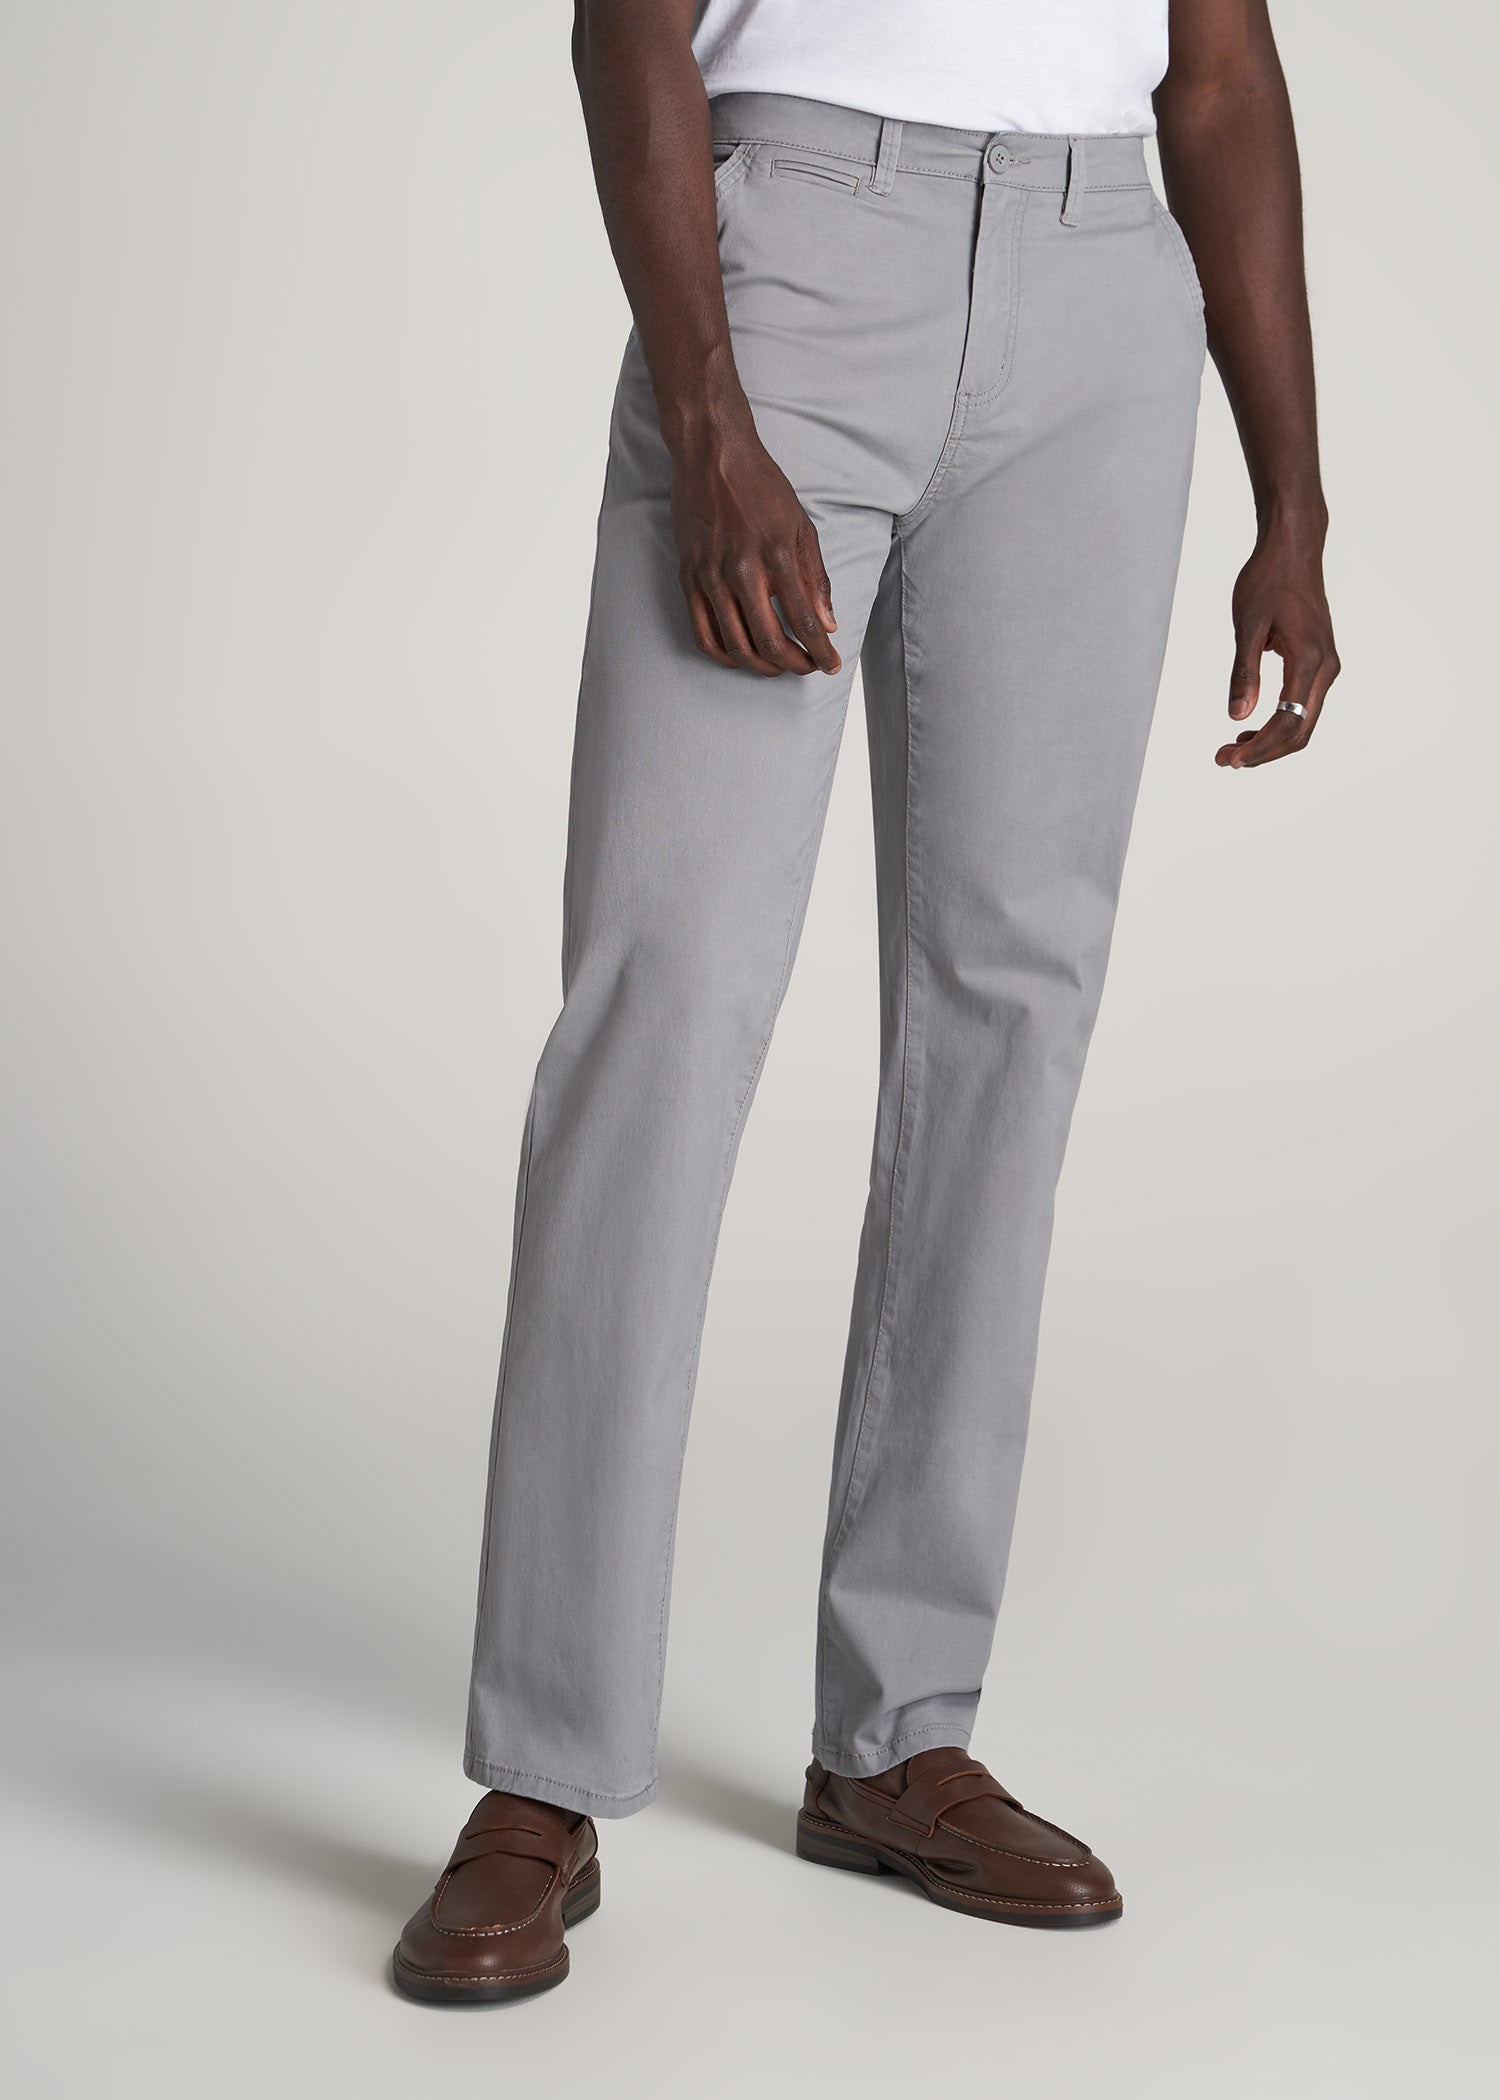 J1 Straight Leg Chinos - Pants for Tall Men